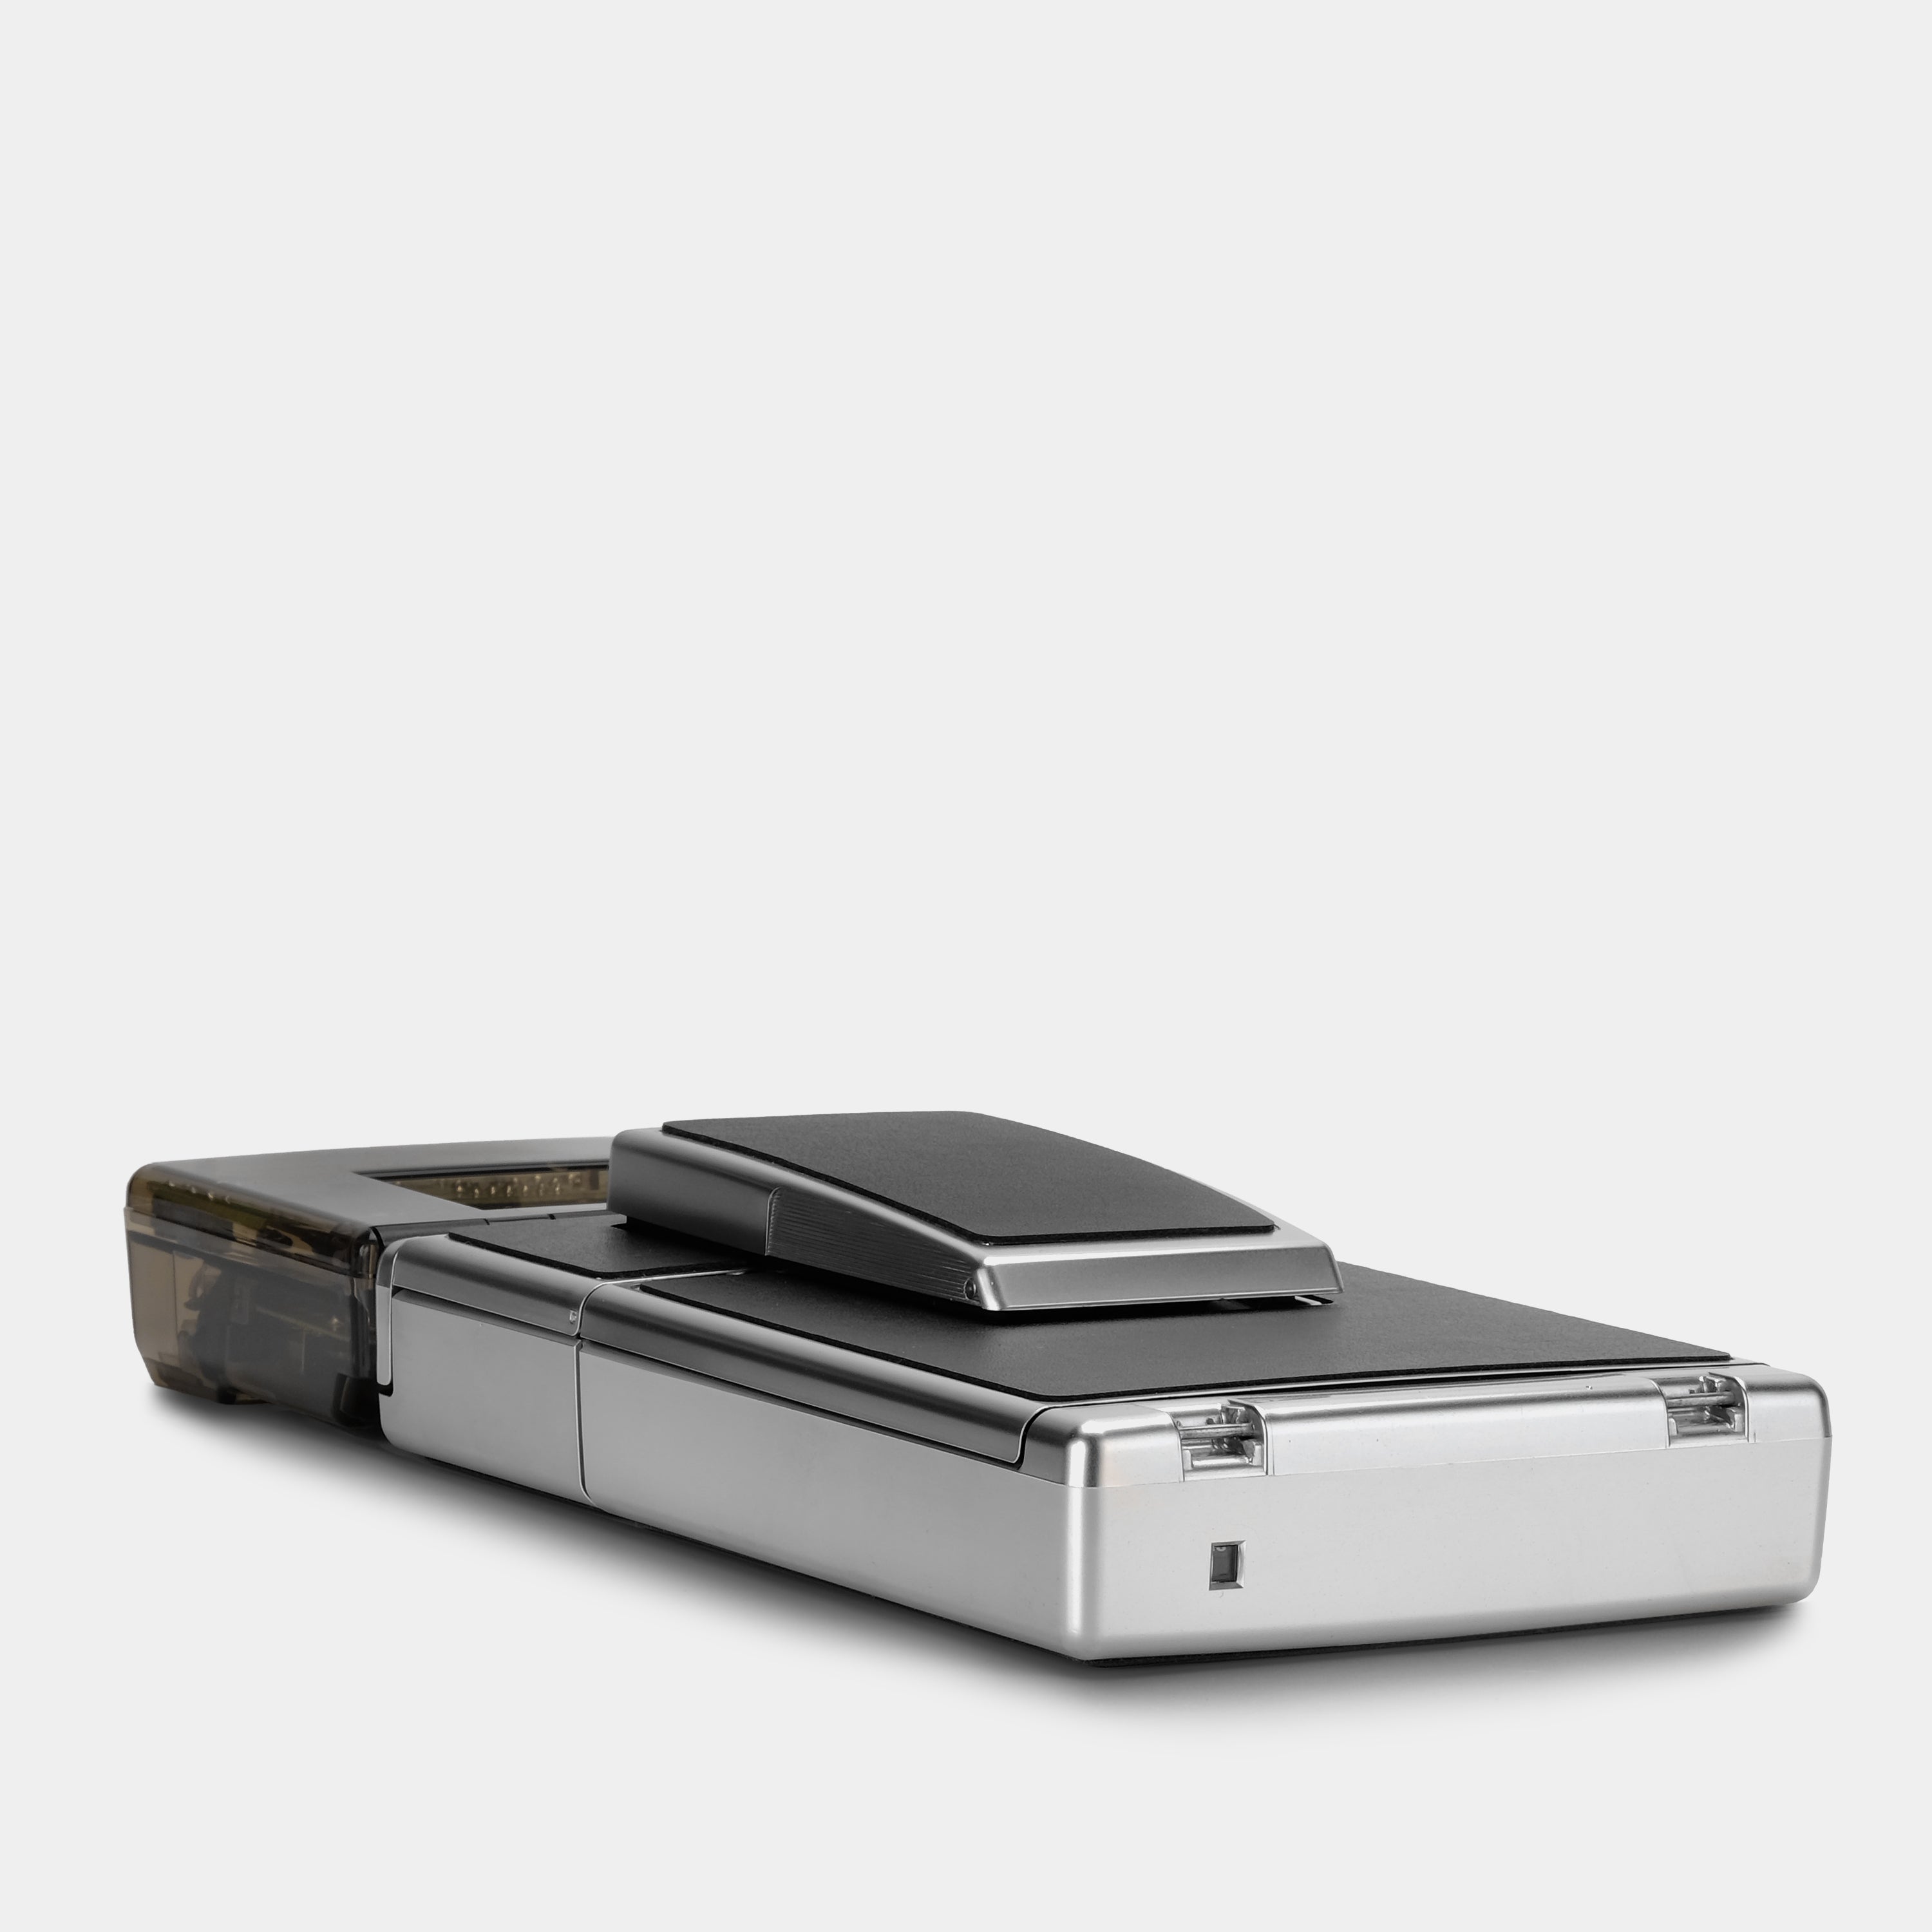 Chrome Polaroid 600 SLR 690 With Smokey Clear Flash Housing Folding Instant Film Camera